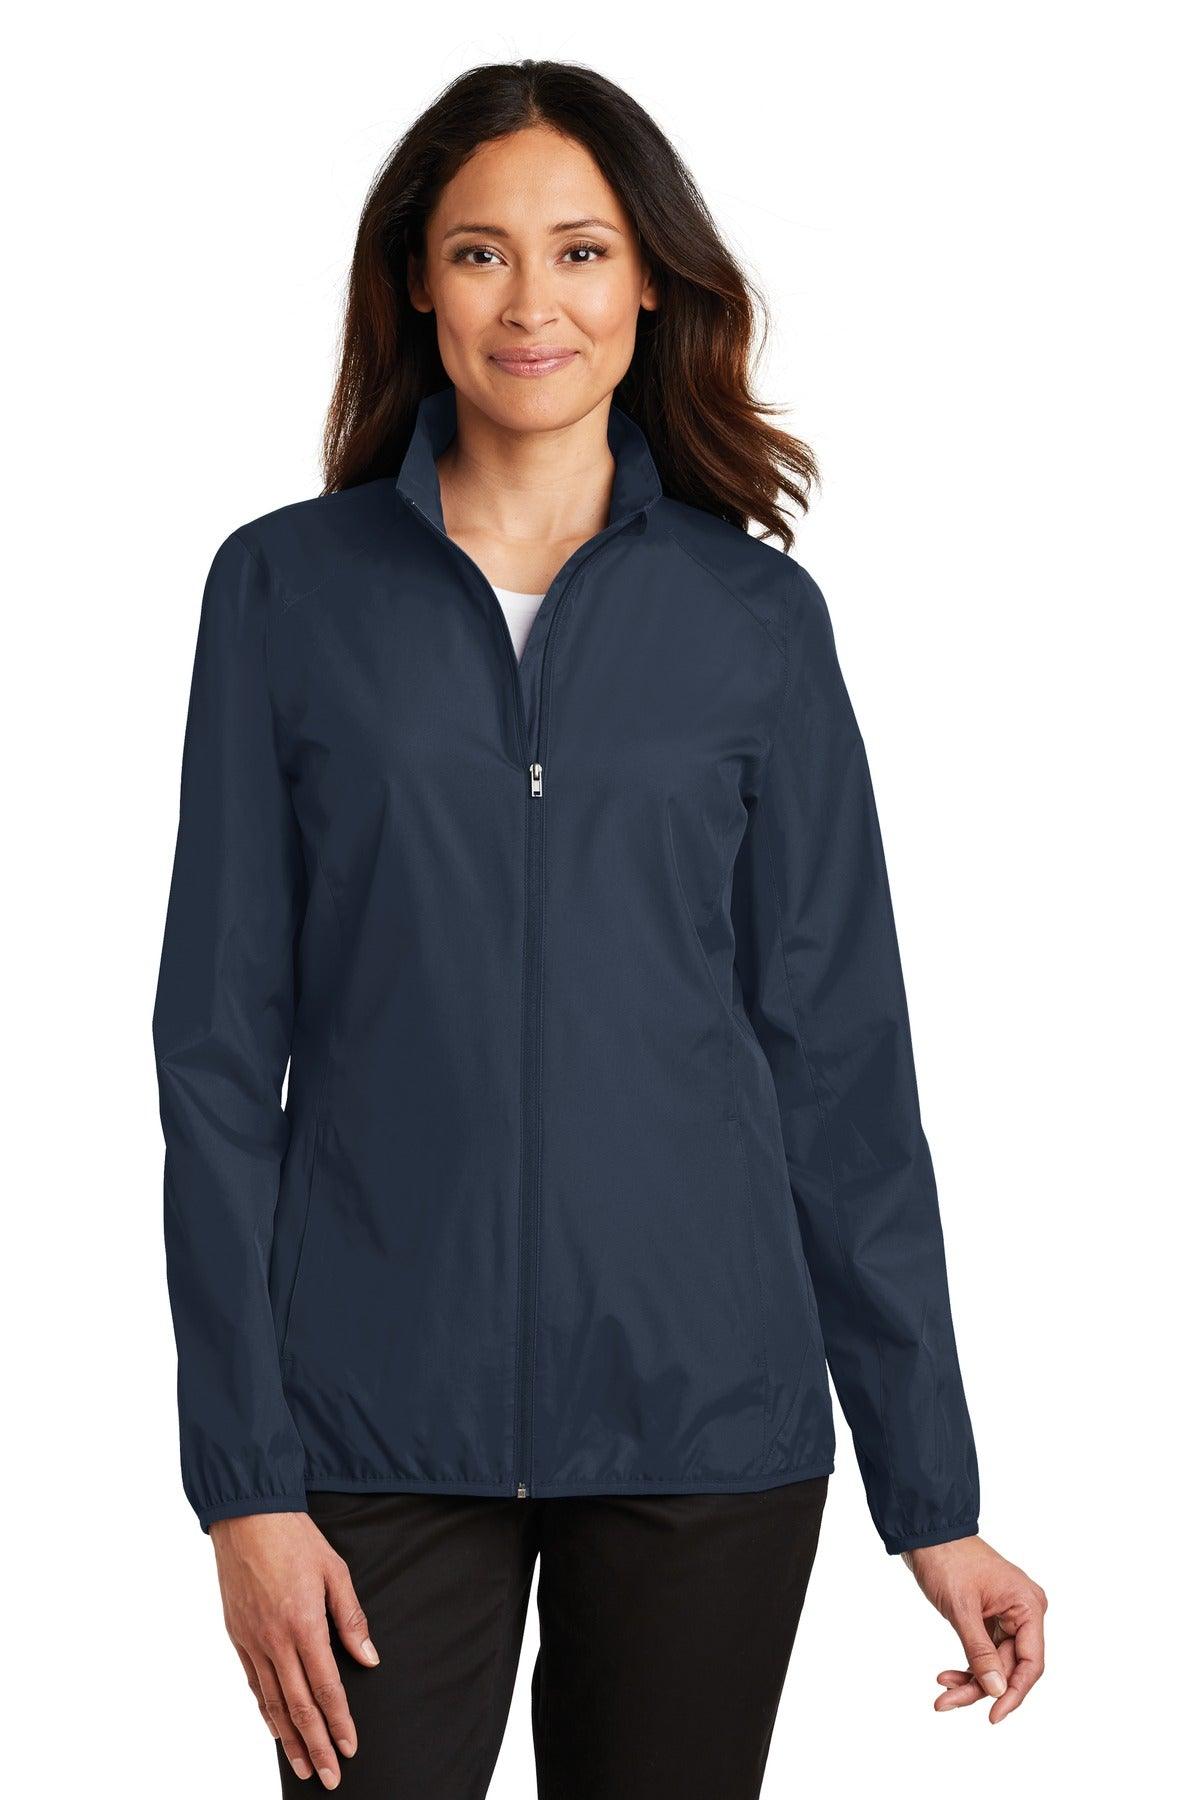 Port Authority Ladies Zephyr Full-Zip Jacket. L344 - Dresses Max